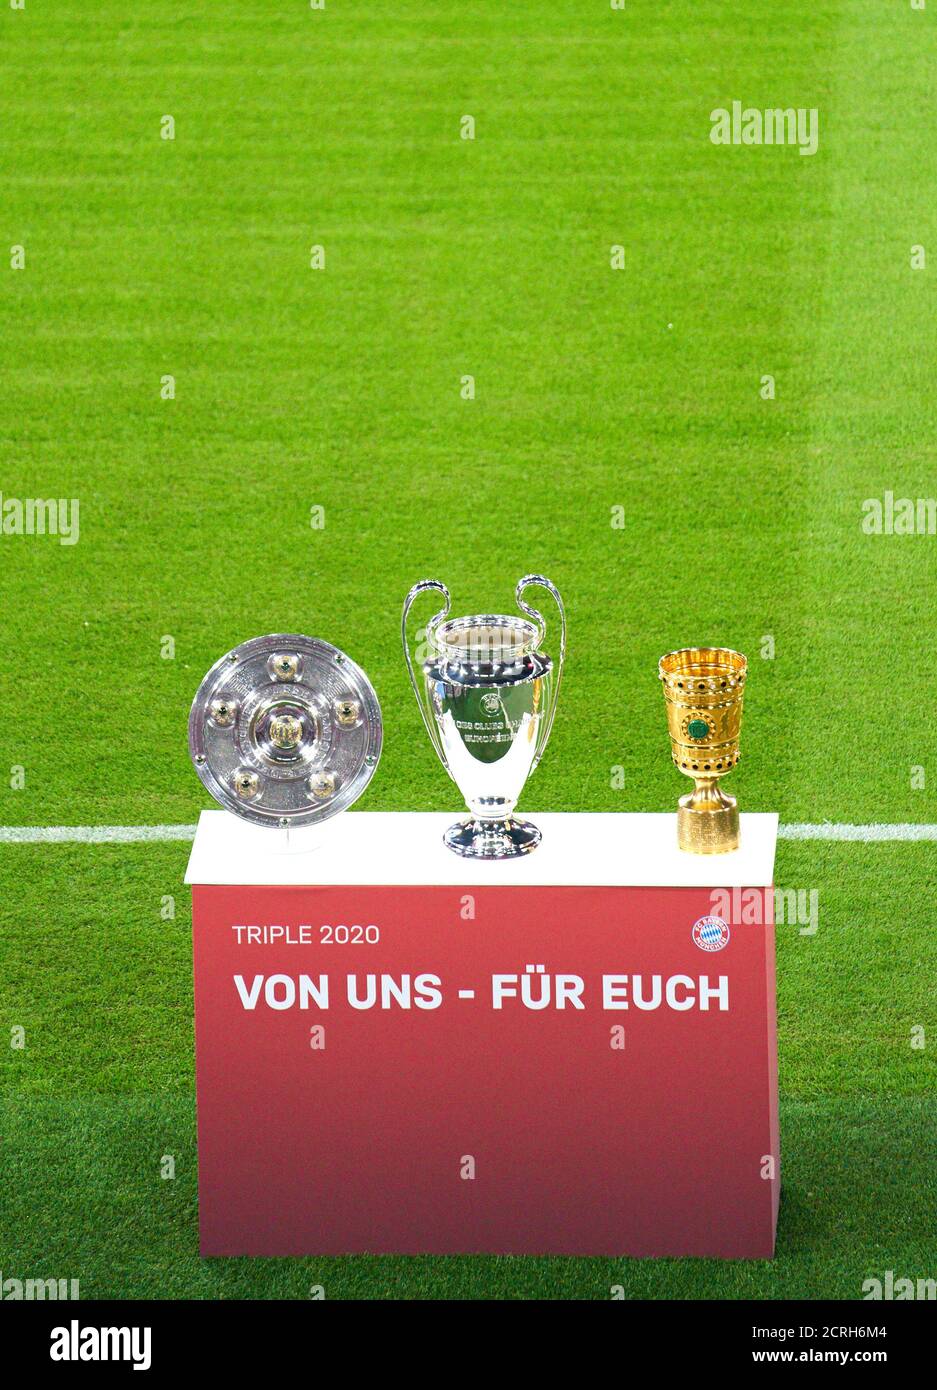 Football Munich - Schalke, Munich Sept 18, 2020. Presentation of trophy german championship, triple, Meisterschale, Schale, Teller, Trophaee, Deutsche Meisterschaft, Meister-schale, Champions League Pokal, Pott, ceremony, DFB-Pokal, Pokal FC BAYERN MUENCHEN - FC SCHALKE 04 8-0  - DFL REGULATIONS PROHIBIT ANY USE OF PHOTOGRAPHS as IMAGE SEQUENCES and/or QUASI-VIDEO -  1.German Soccer League , Munich, September 18, 2020.  Season 2020/2021, match day 01, FCB, München, Munich © Peter Schatz / Alamy Live News Stock Photo